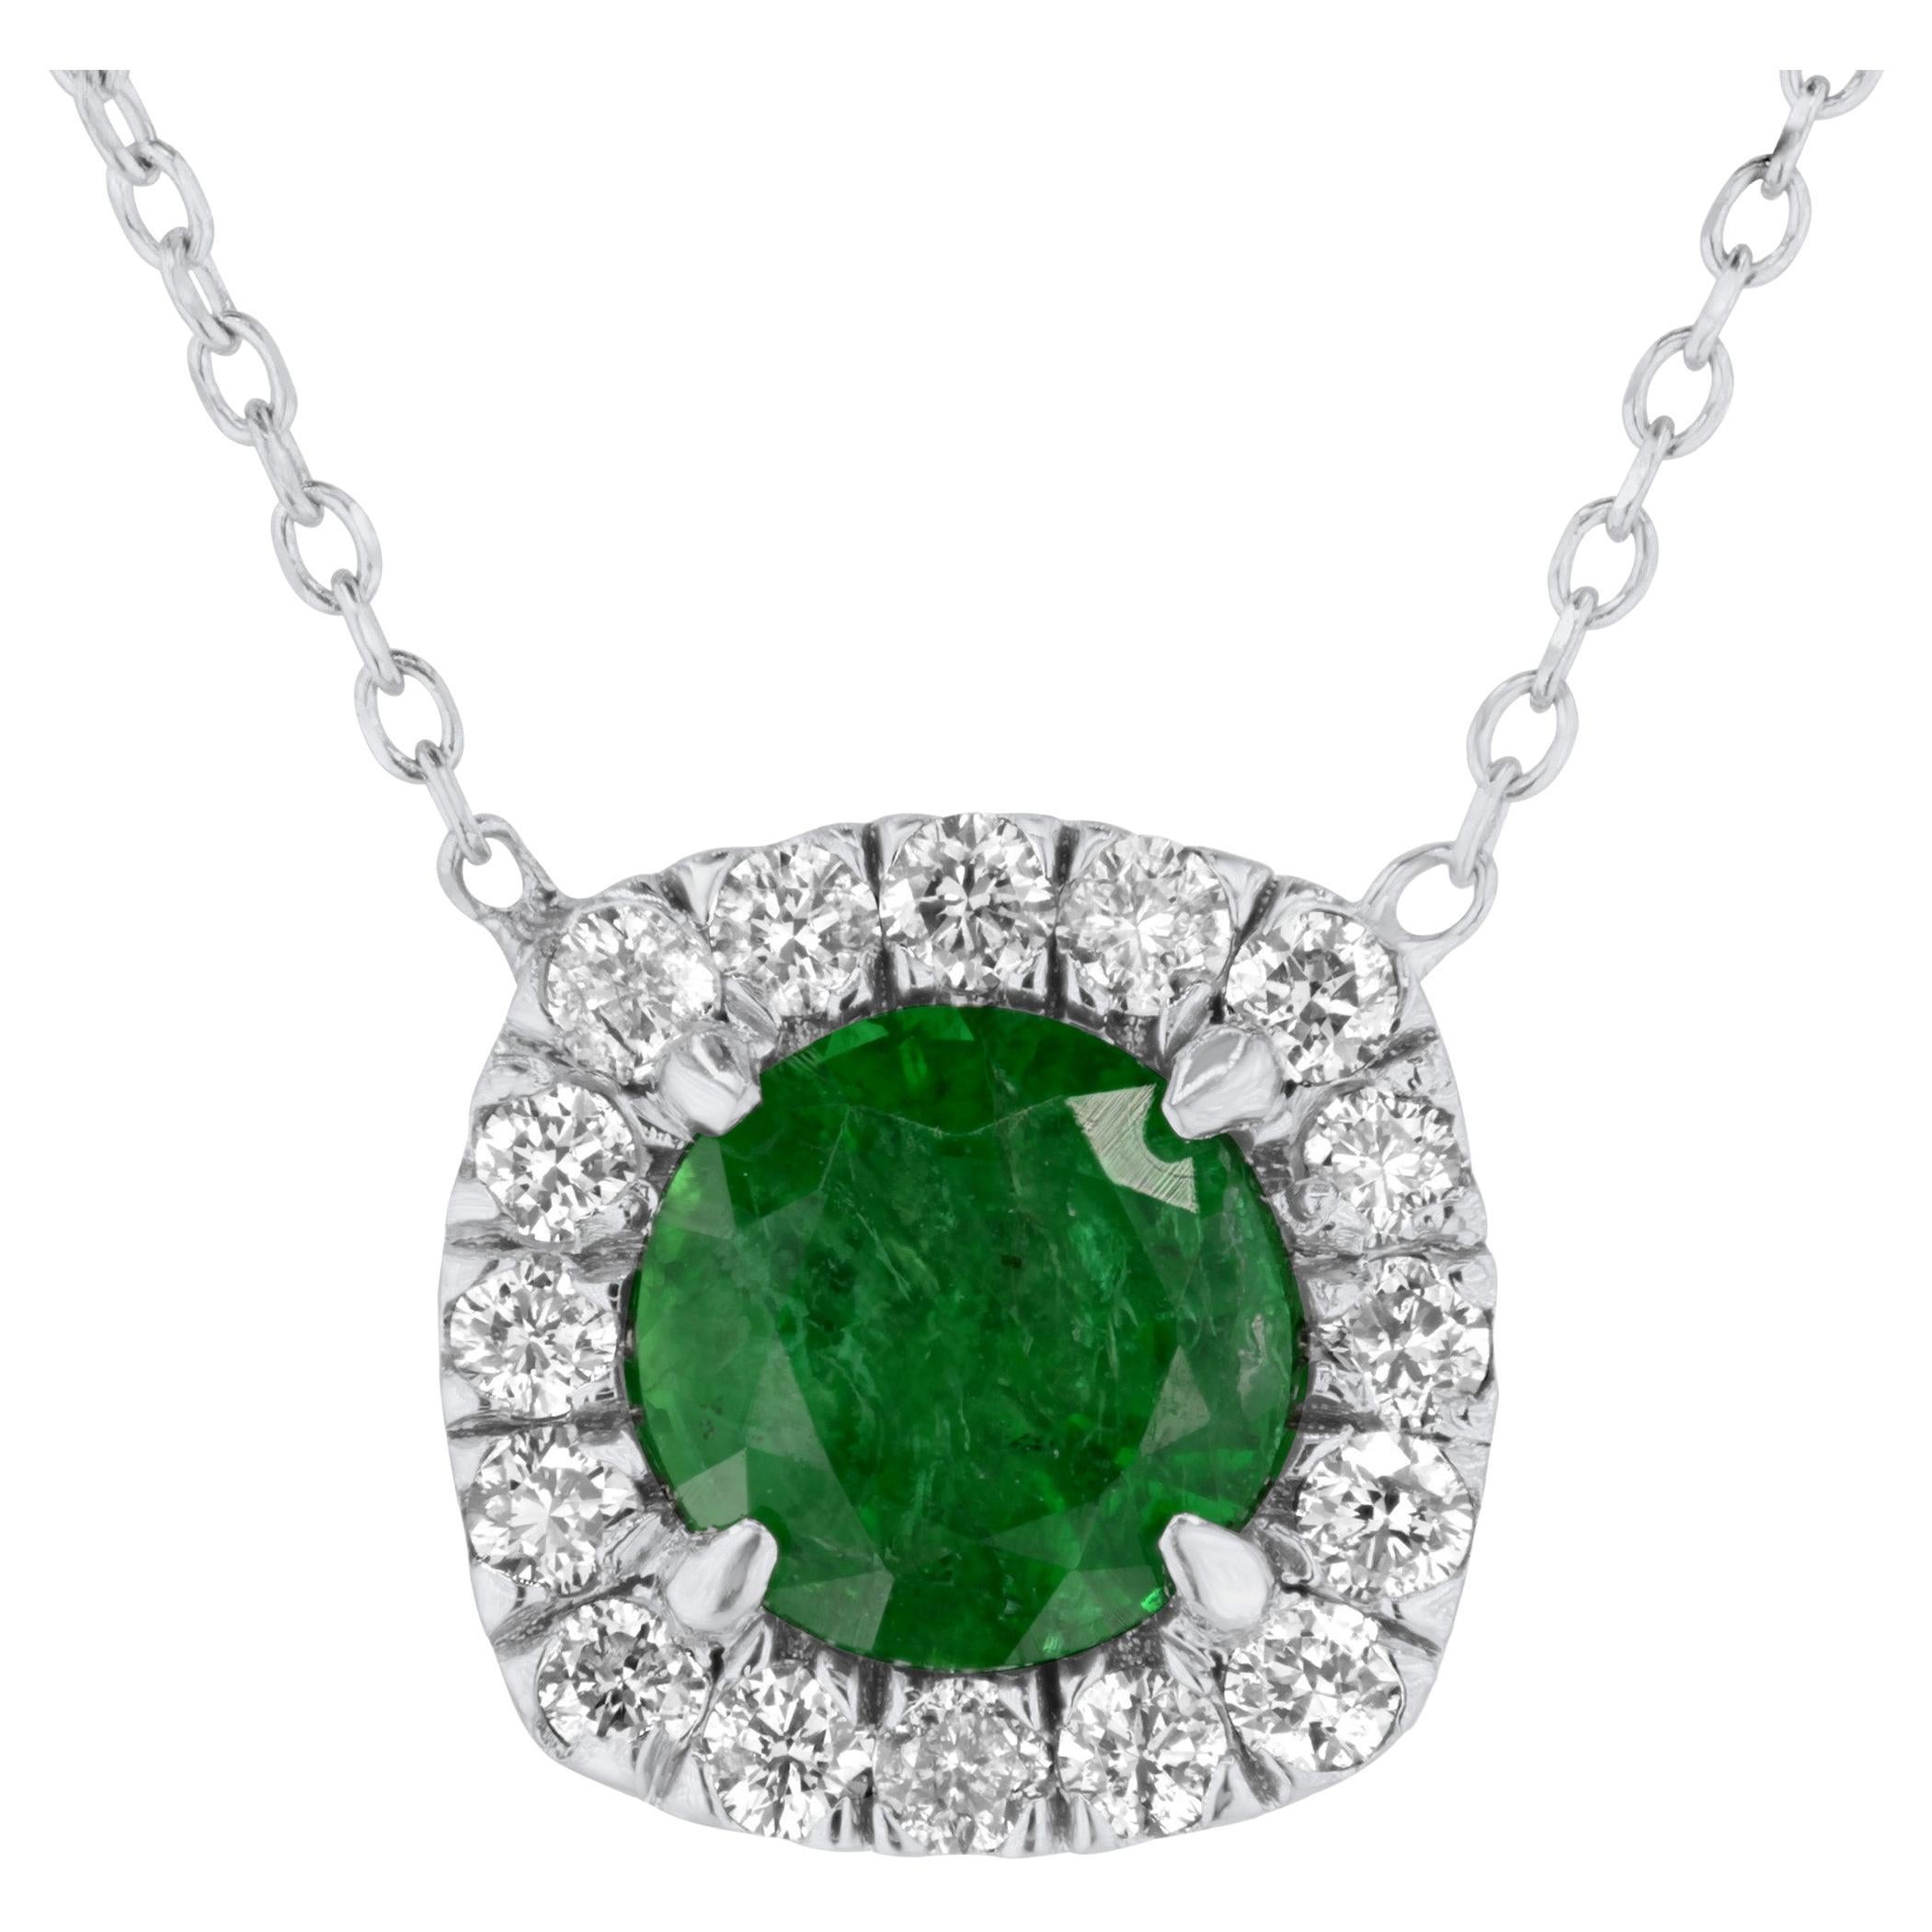 0.76 Carat Round Emerald Pendant with 0.24 Carat Diamond Halo in 14k ref2120